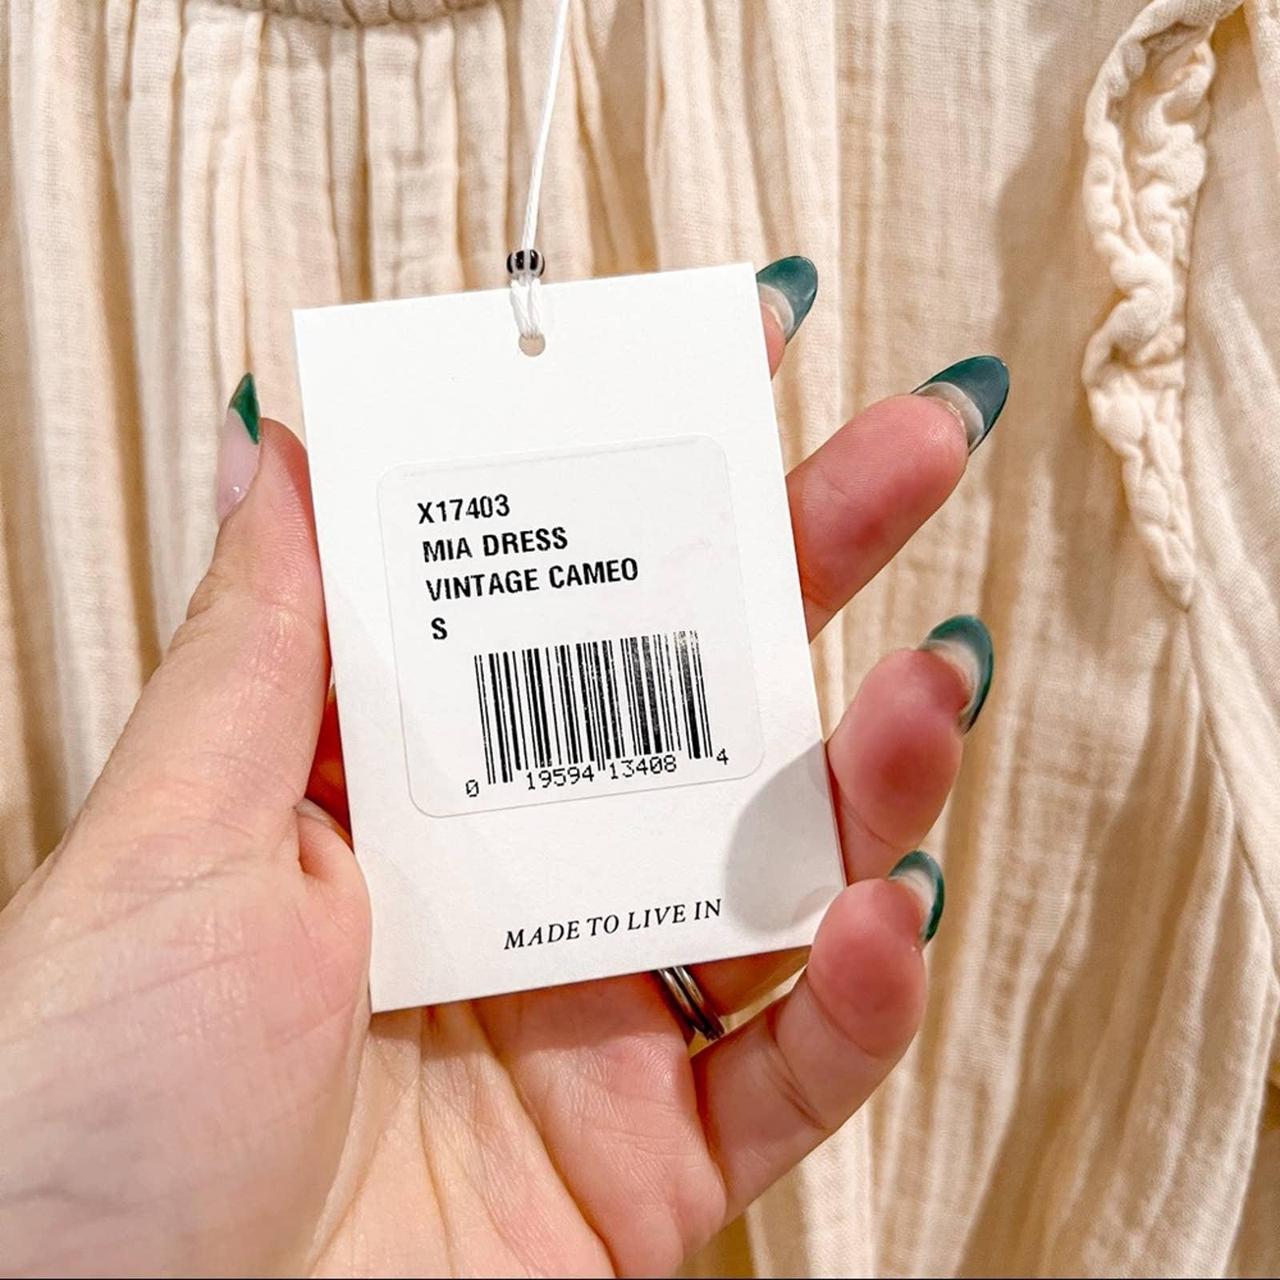 Product Image 4 - Iconic Xirena Gauze Mia Dress
Ruffle